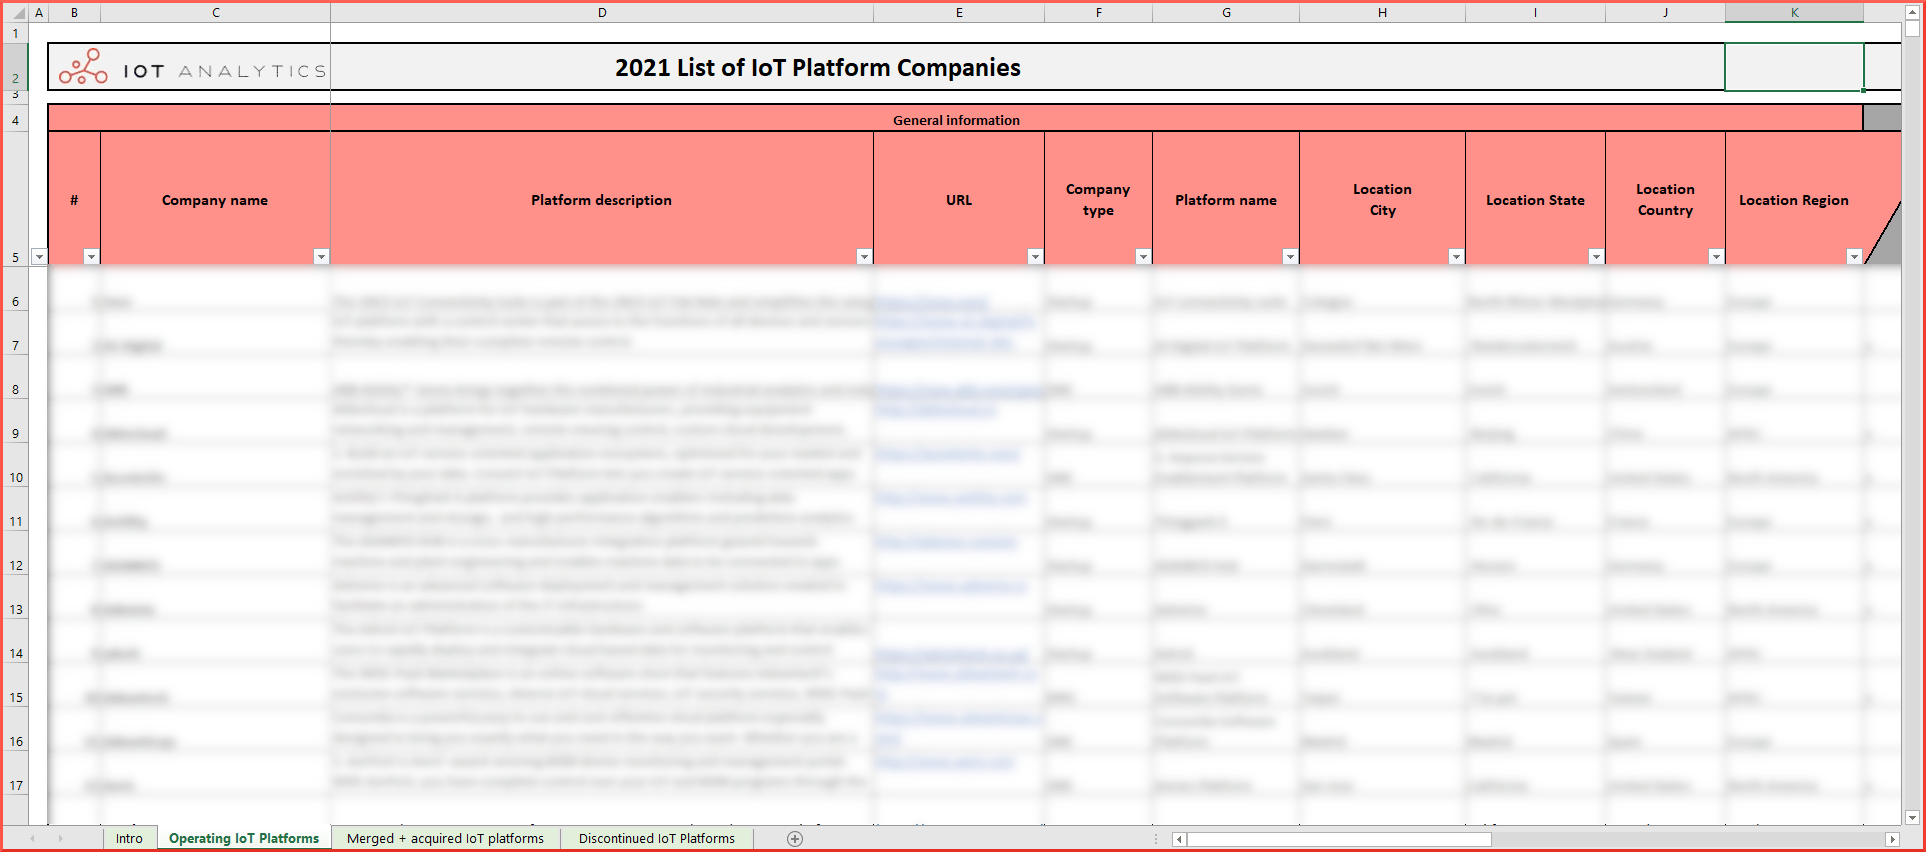 Iot platform companies list - Operating